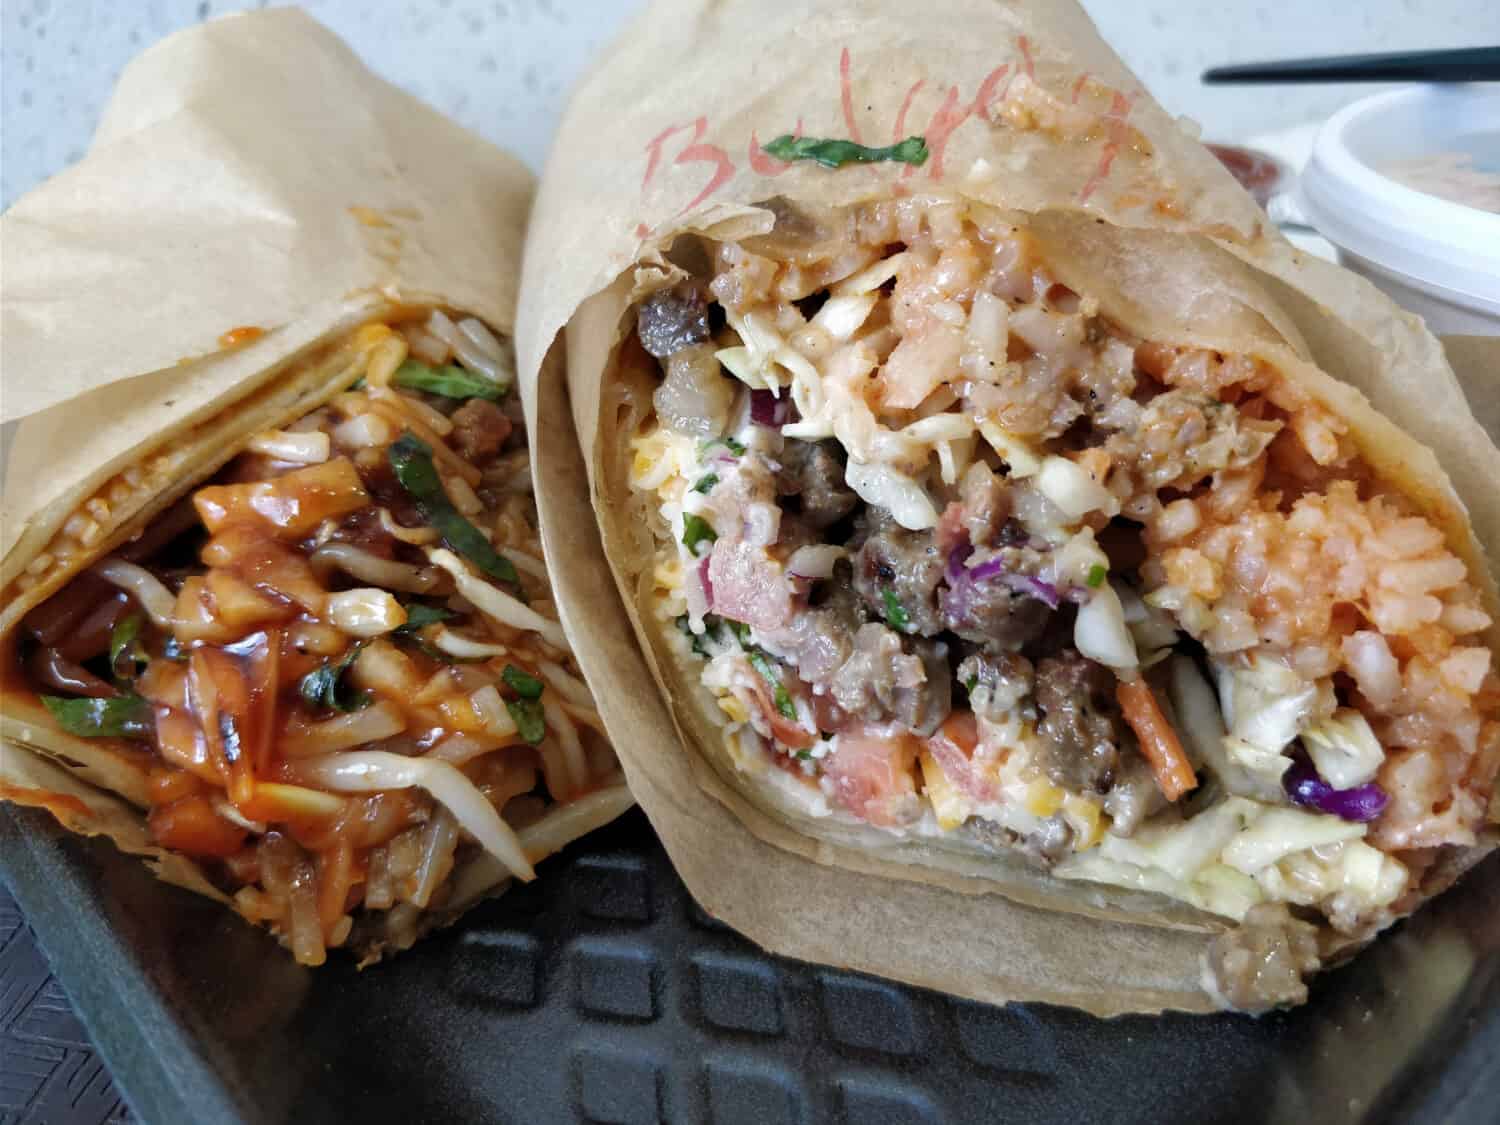 Asian fusion food, a Korean bulgolgi beef burrito and a Vietnamese pho burrito.